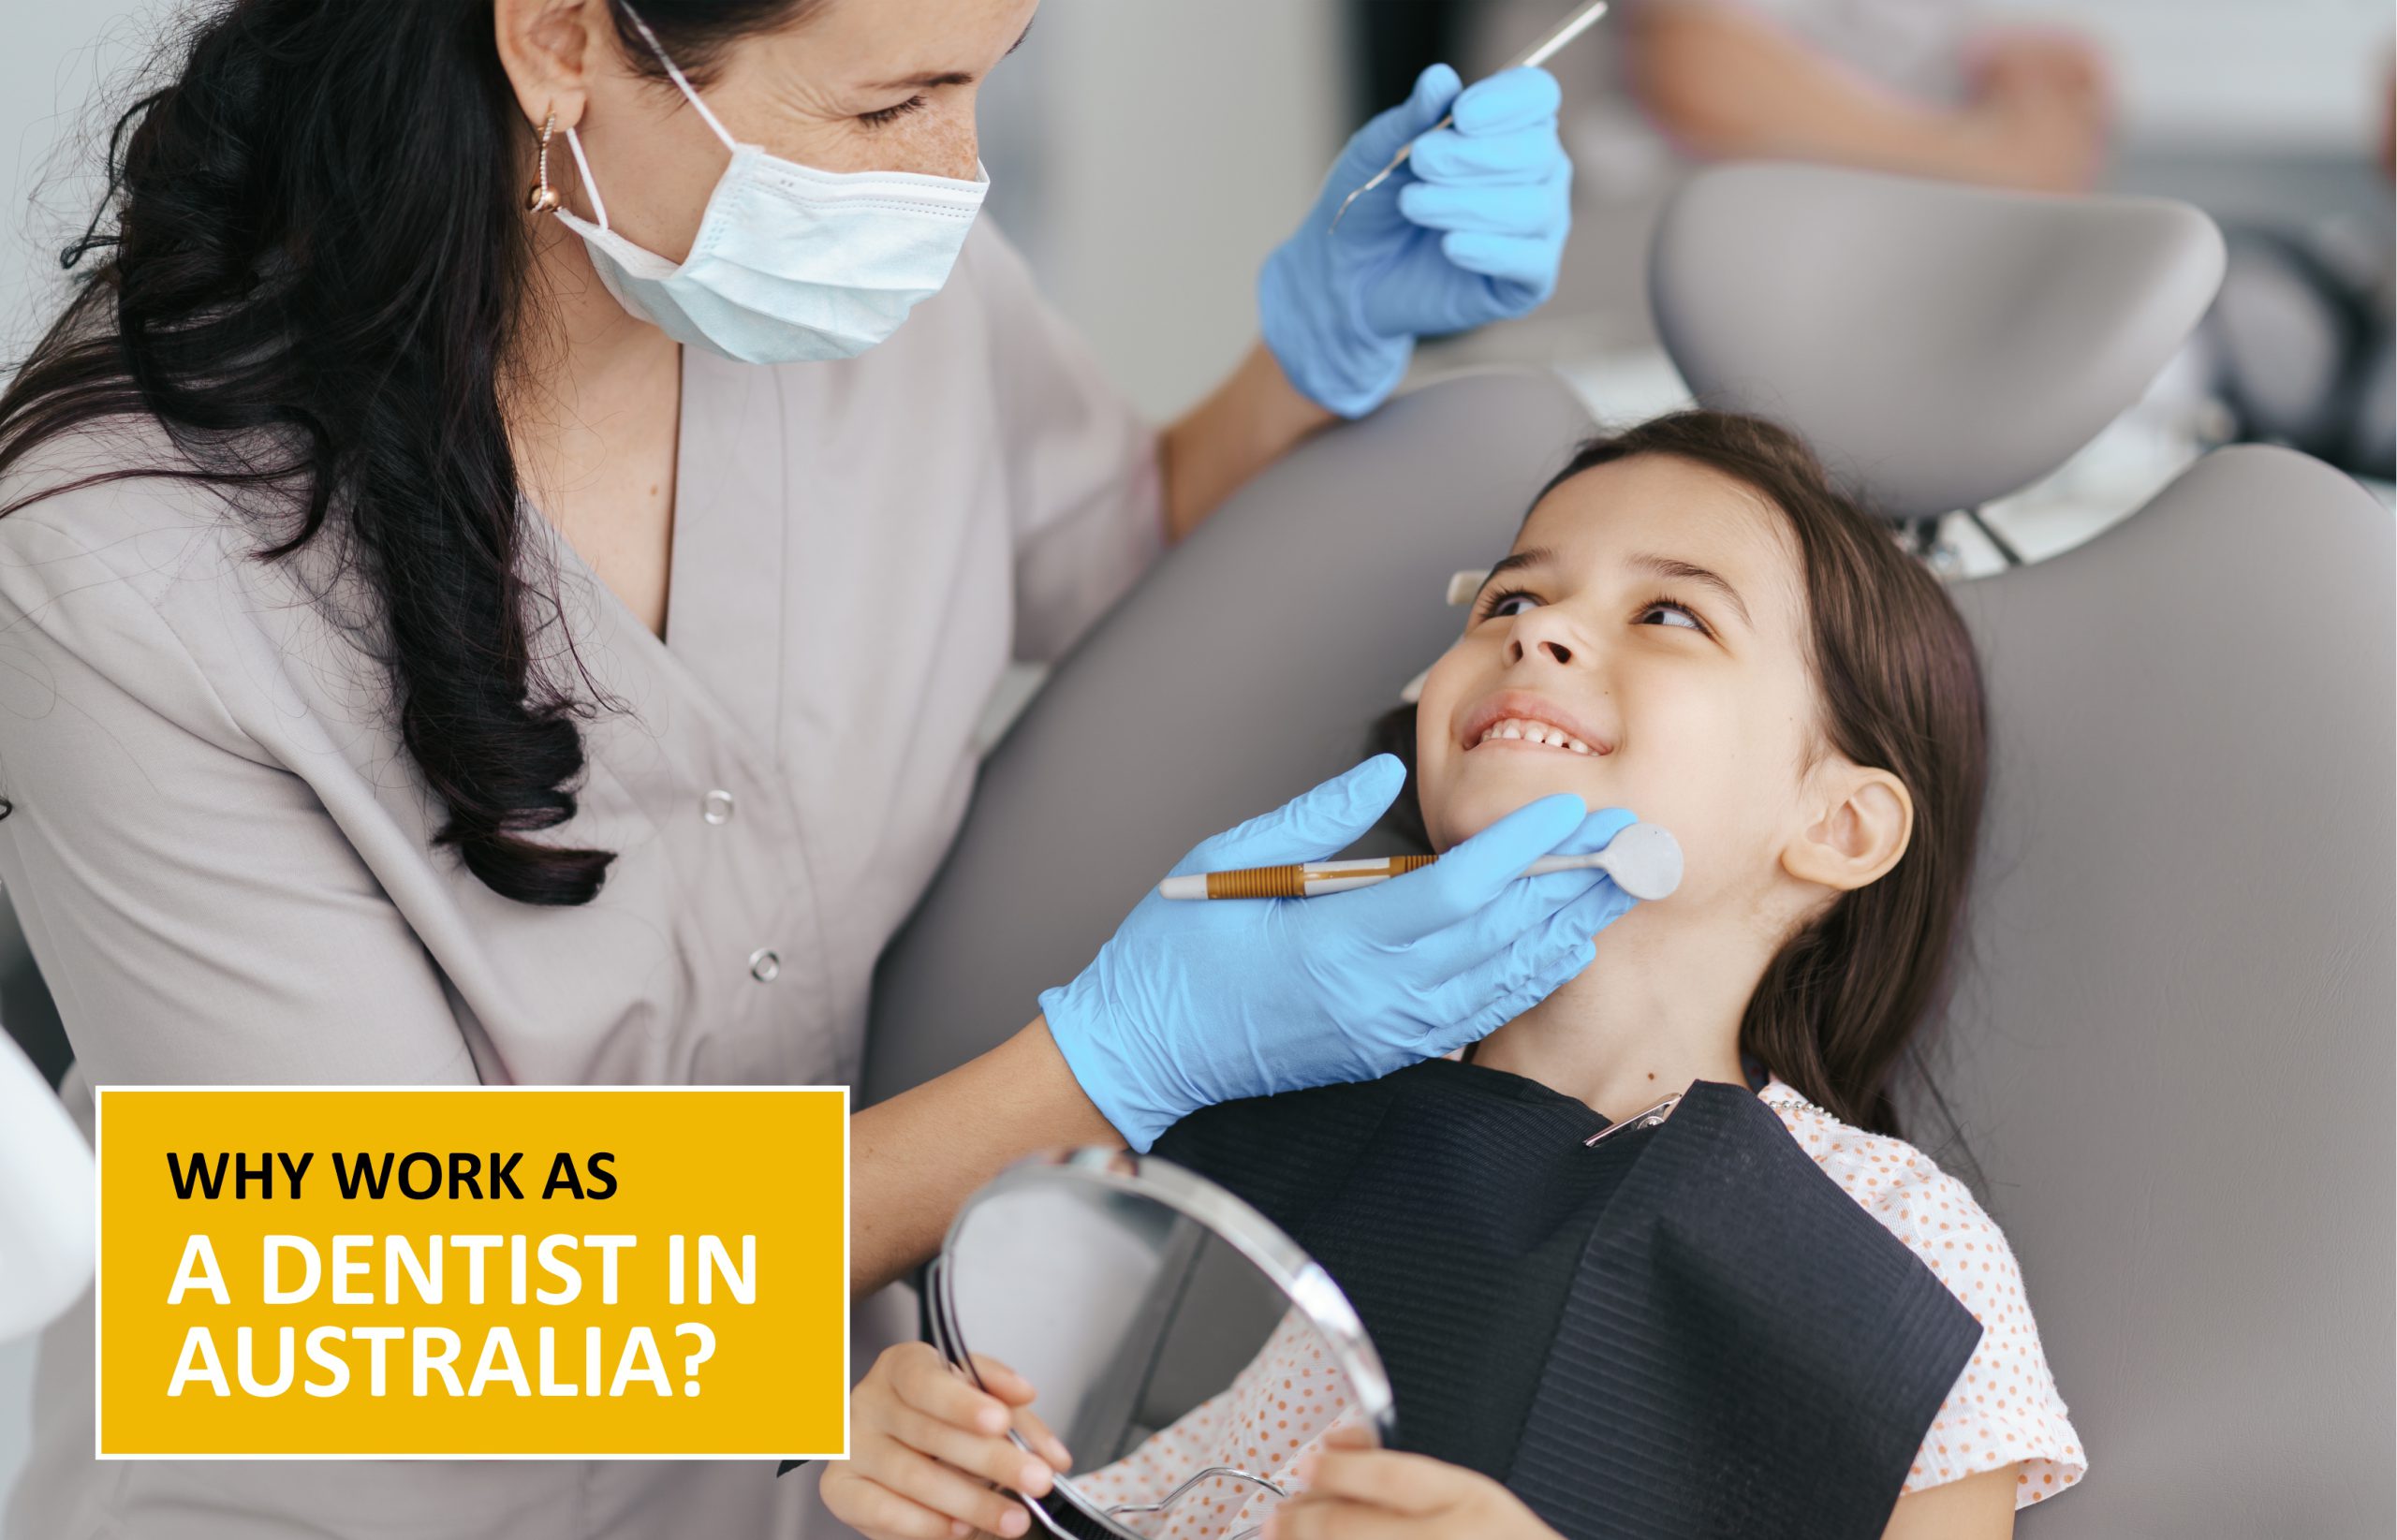 Why work as a dentist in Australia?